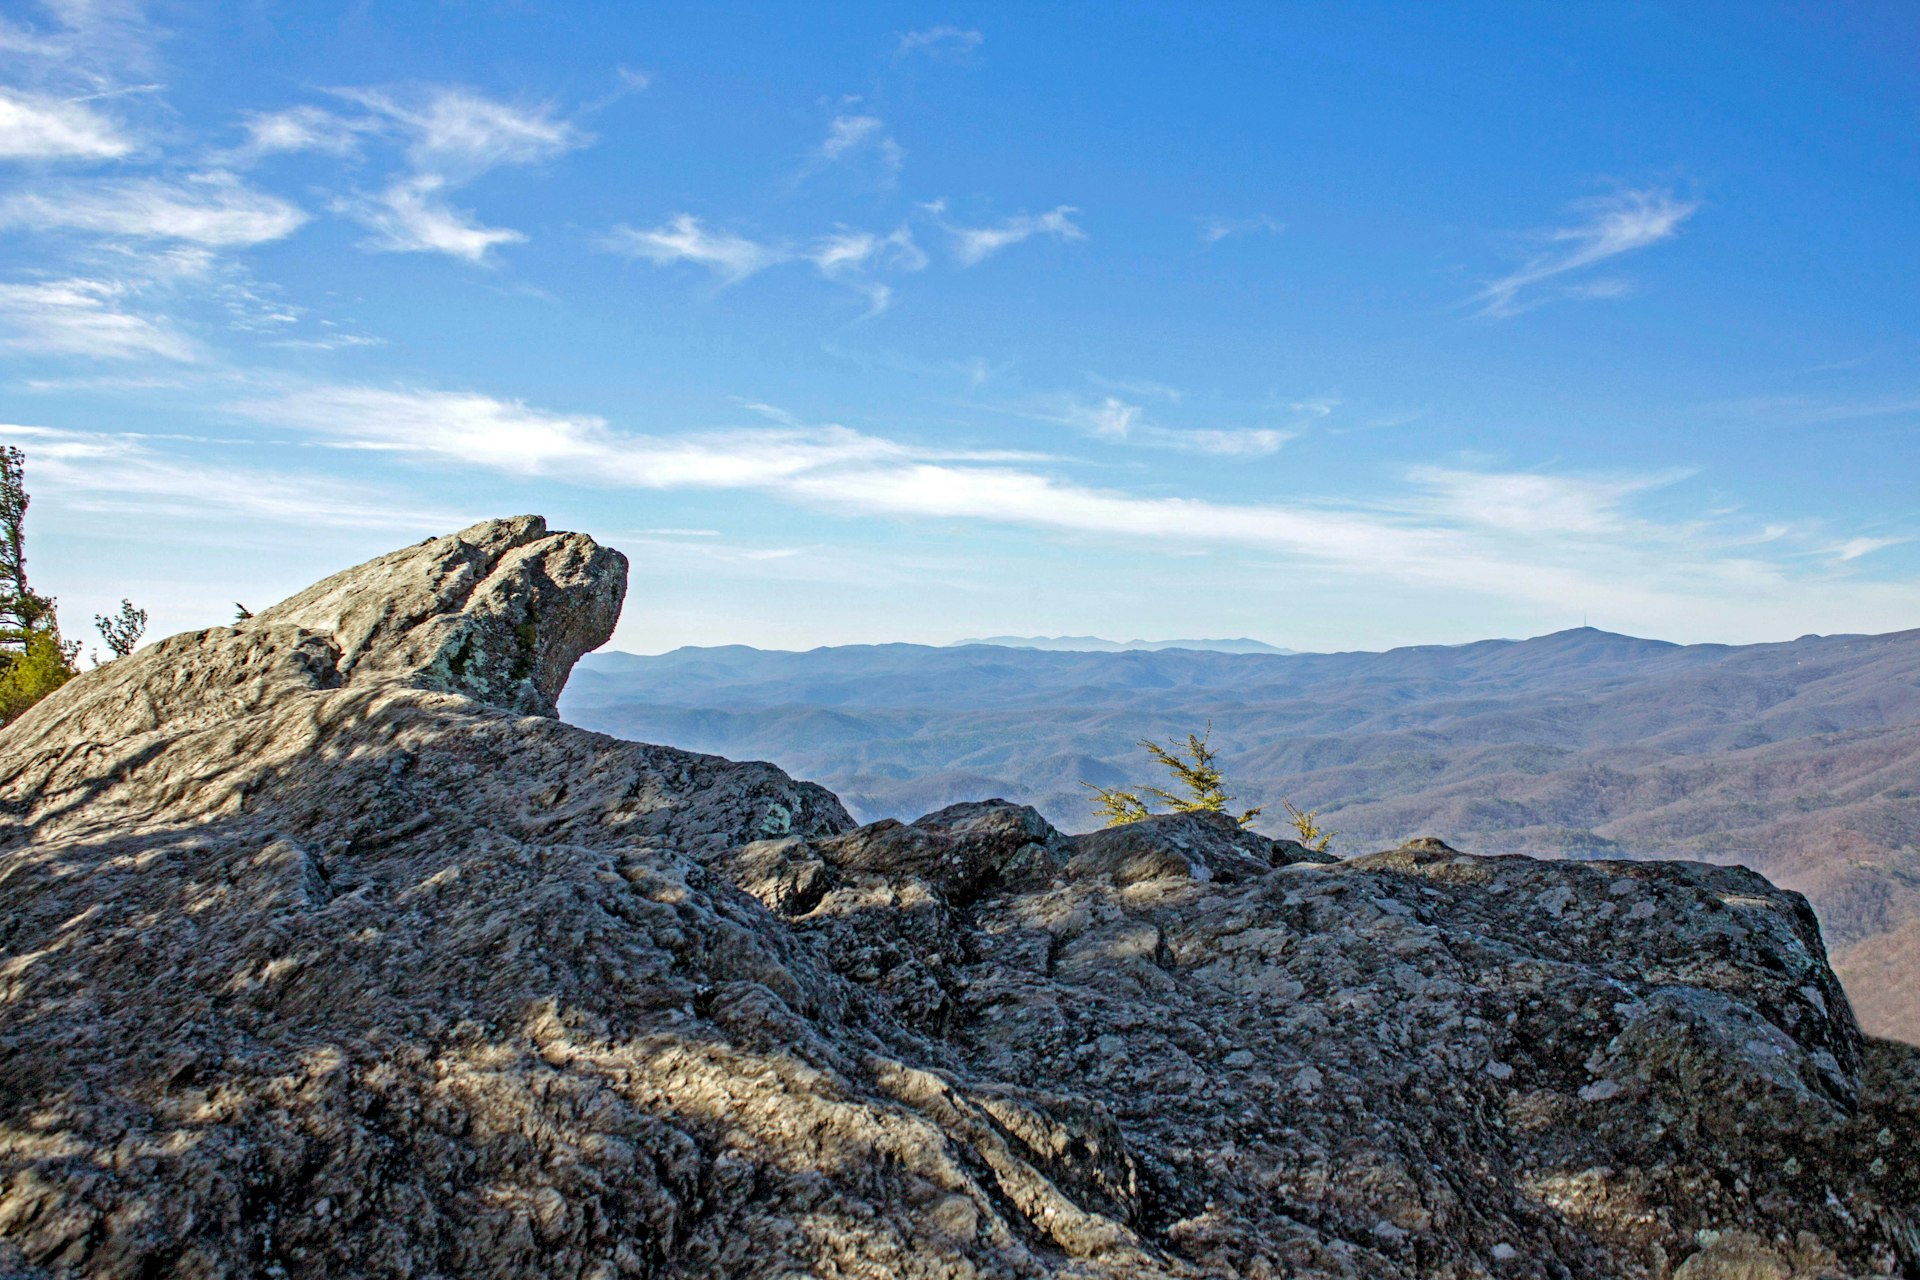 A rocky outcrop overlooking mountains